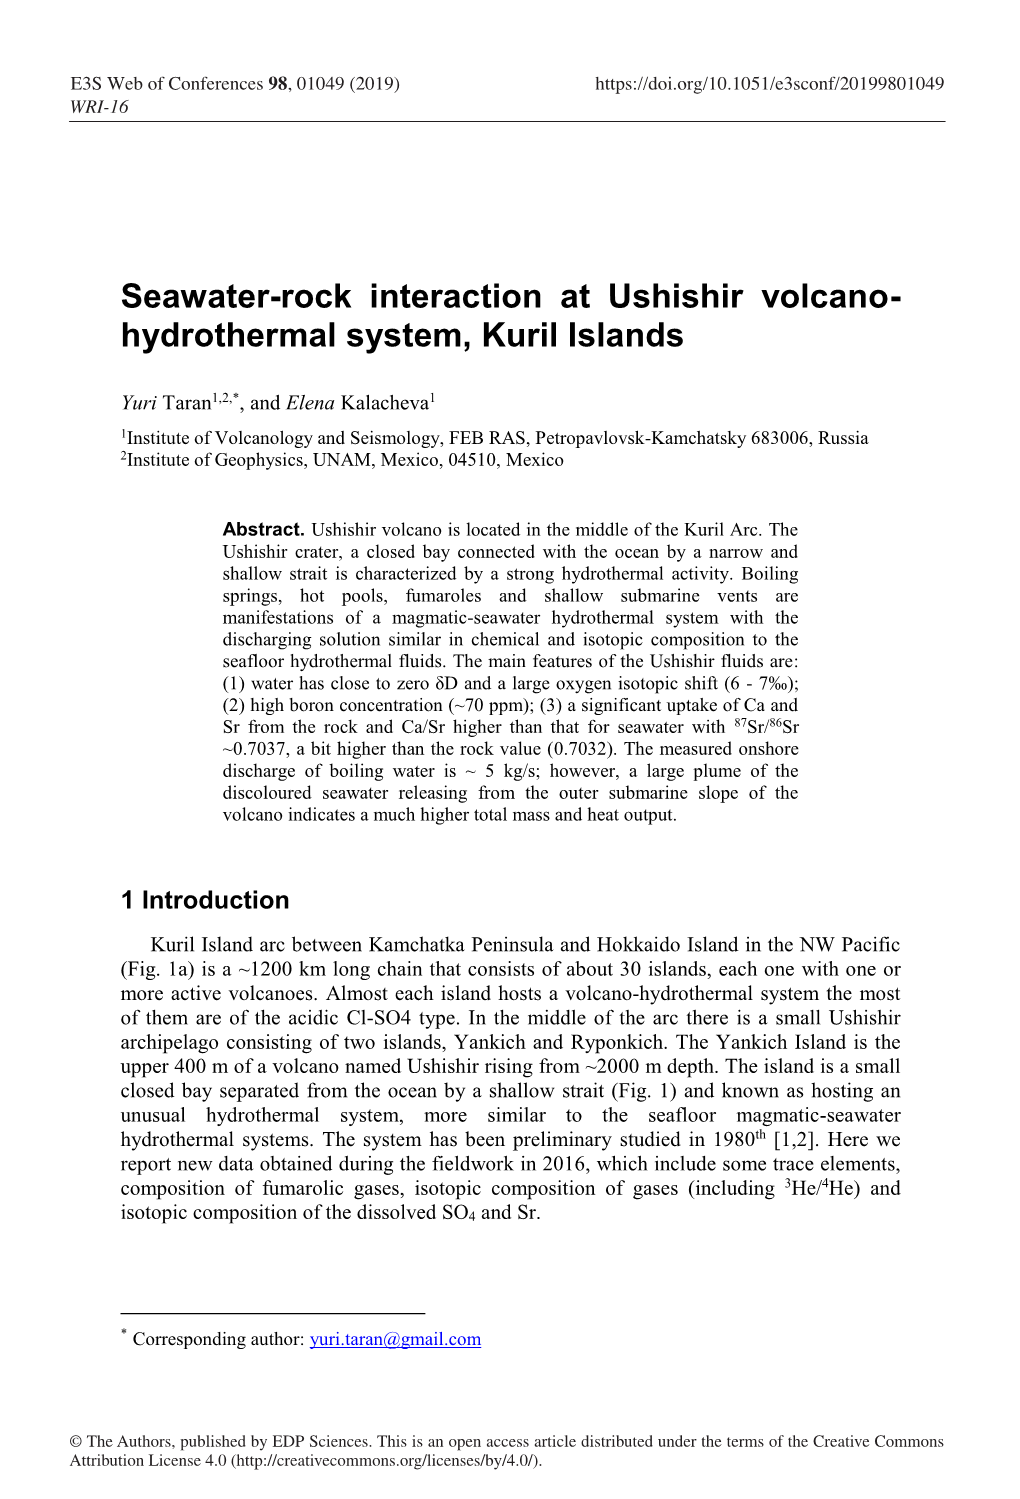 Seawater-Rock Interaction at Ushishir Volcano-Hydrothermal System, Kuril